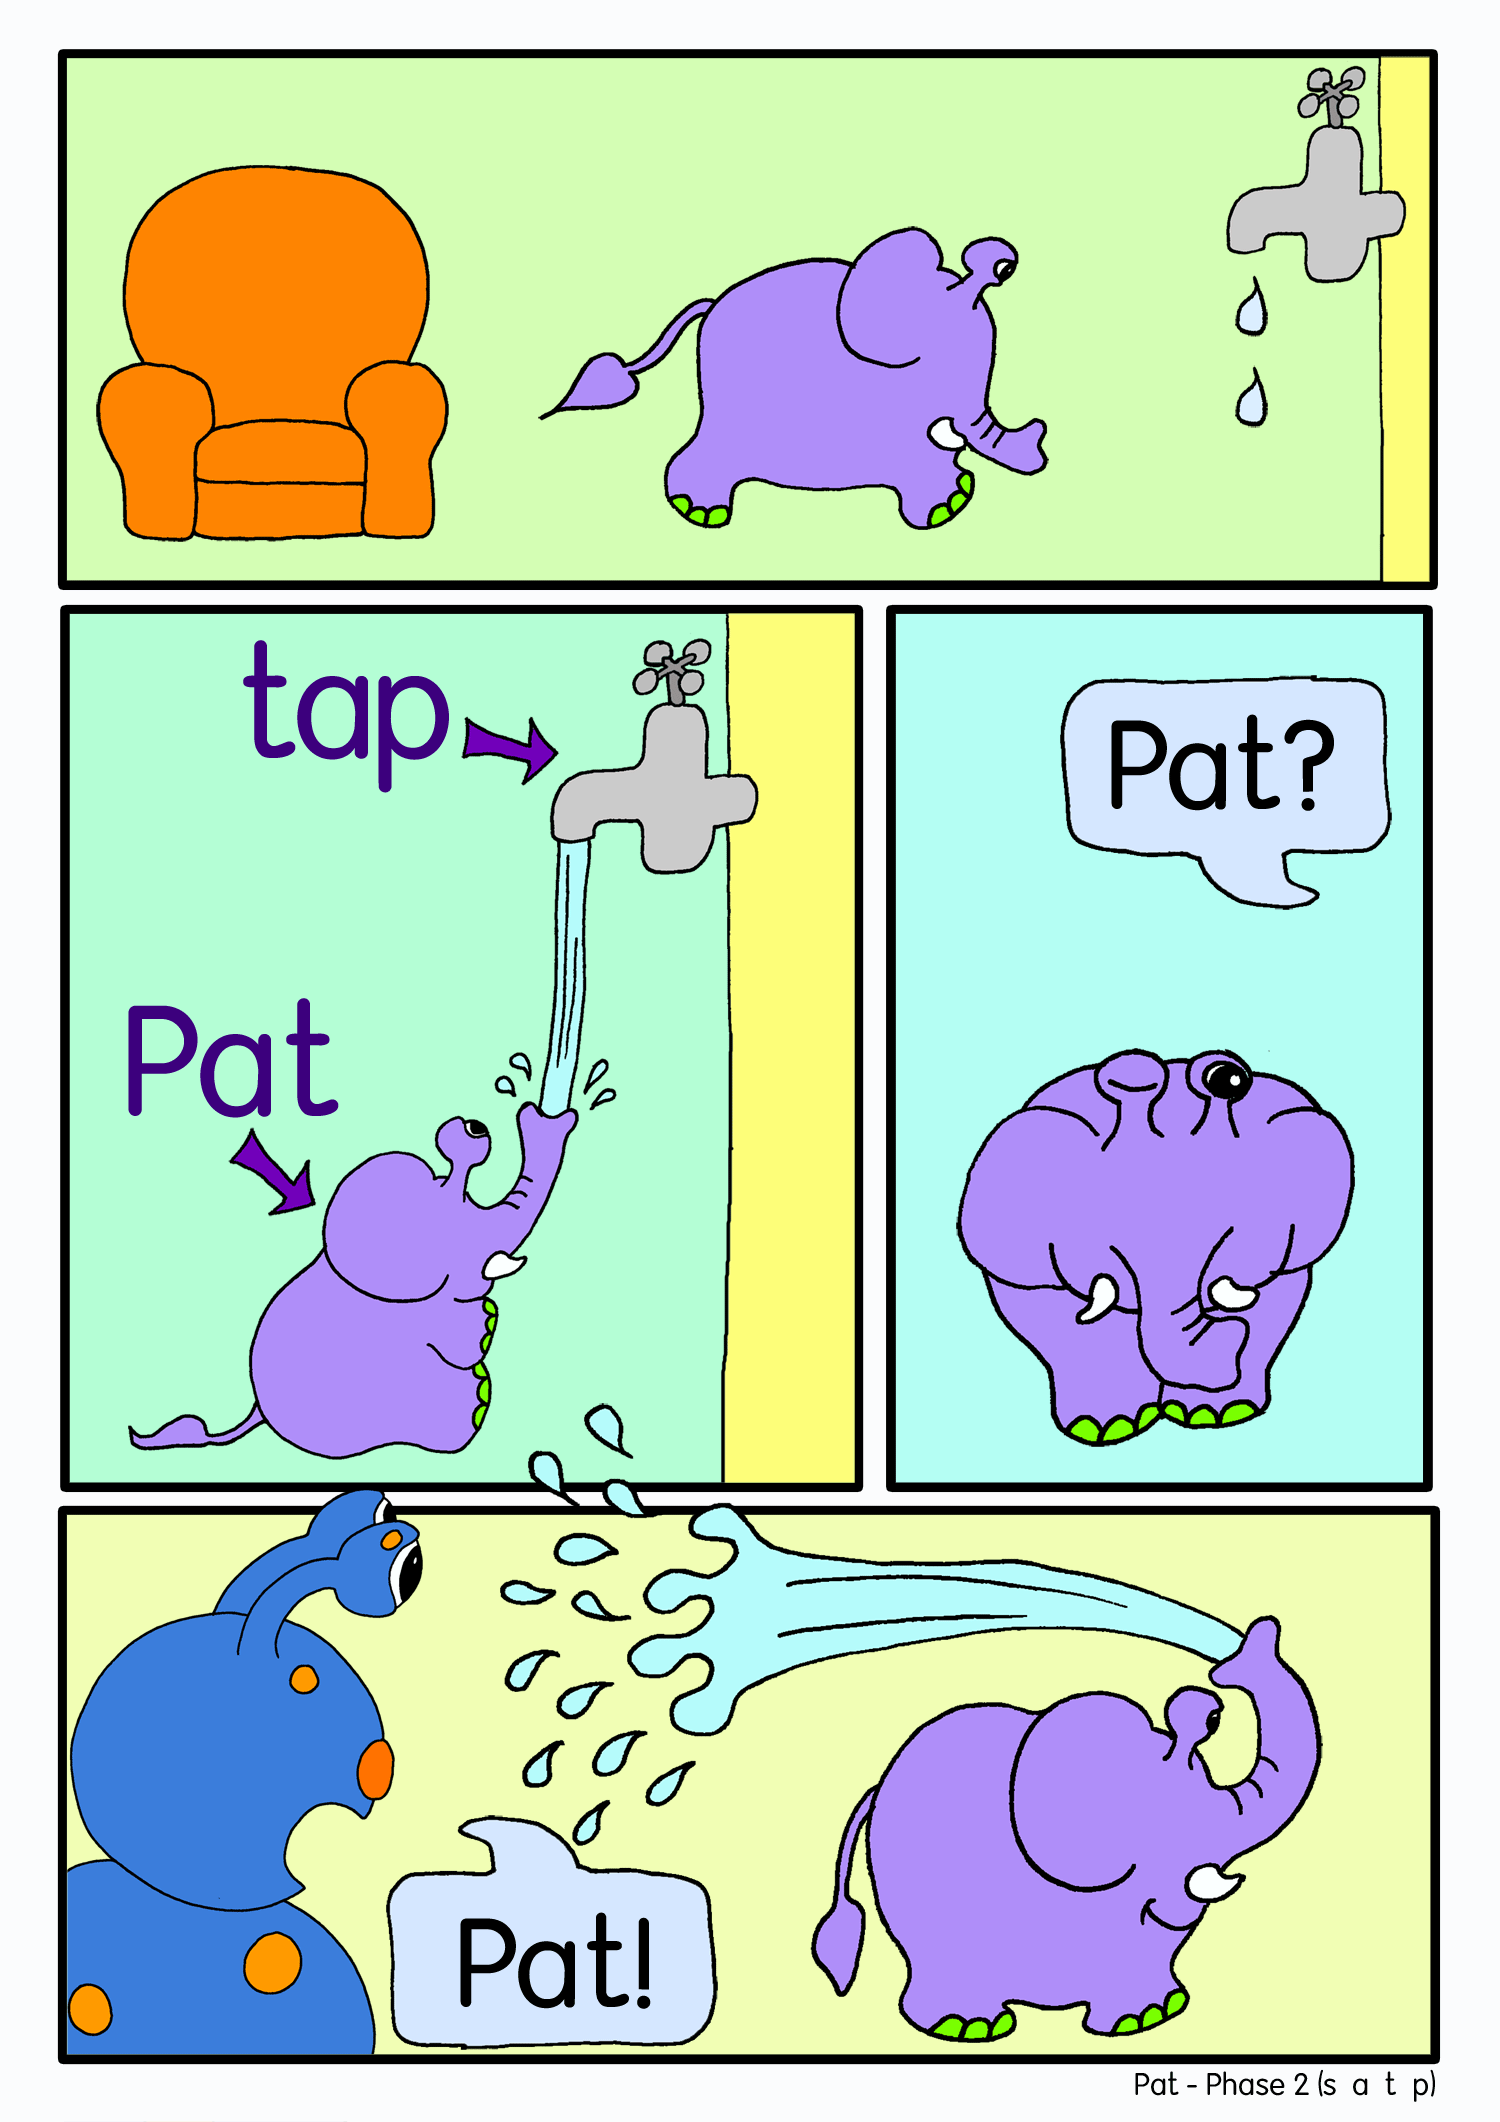 Pat comic panel2